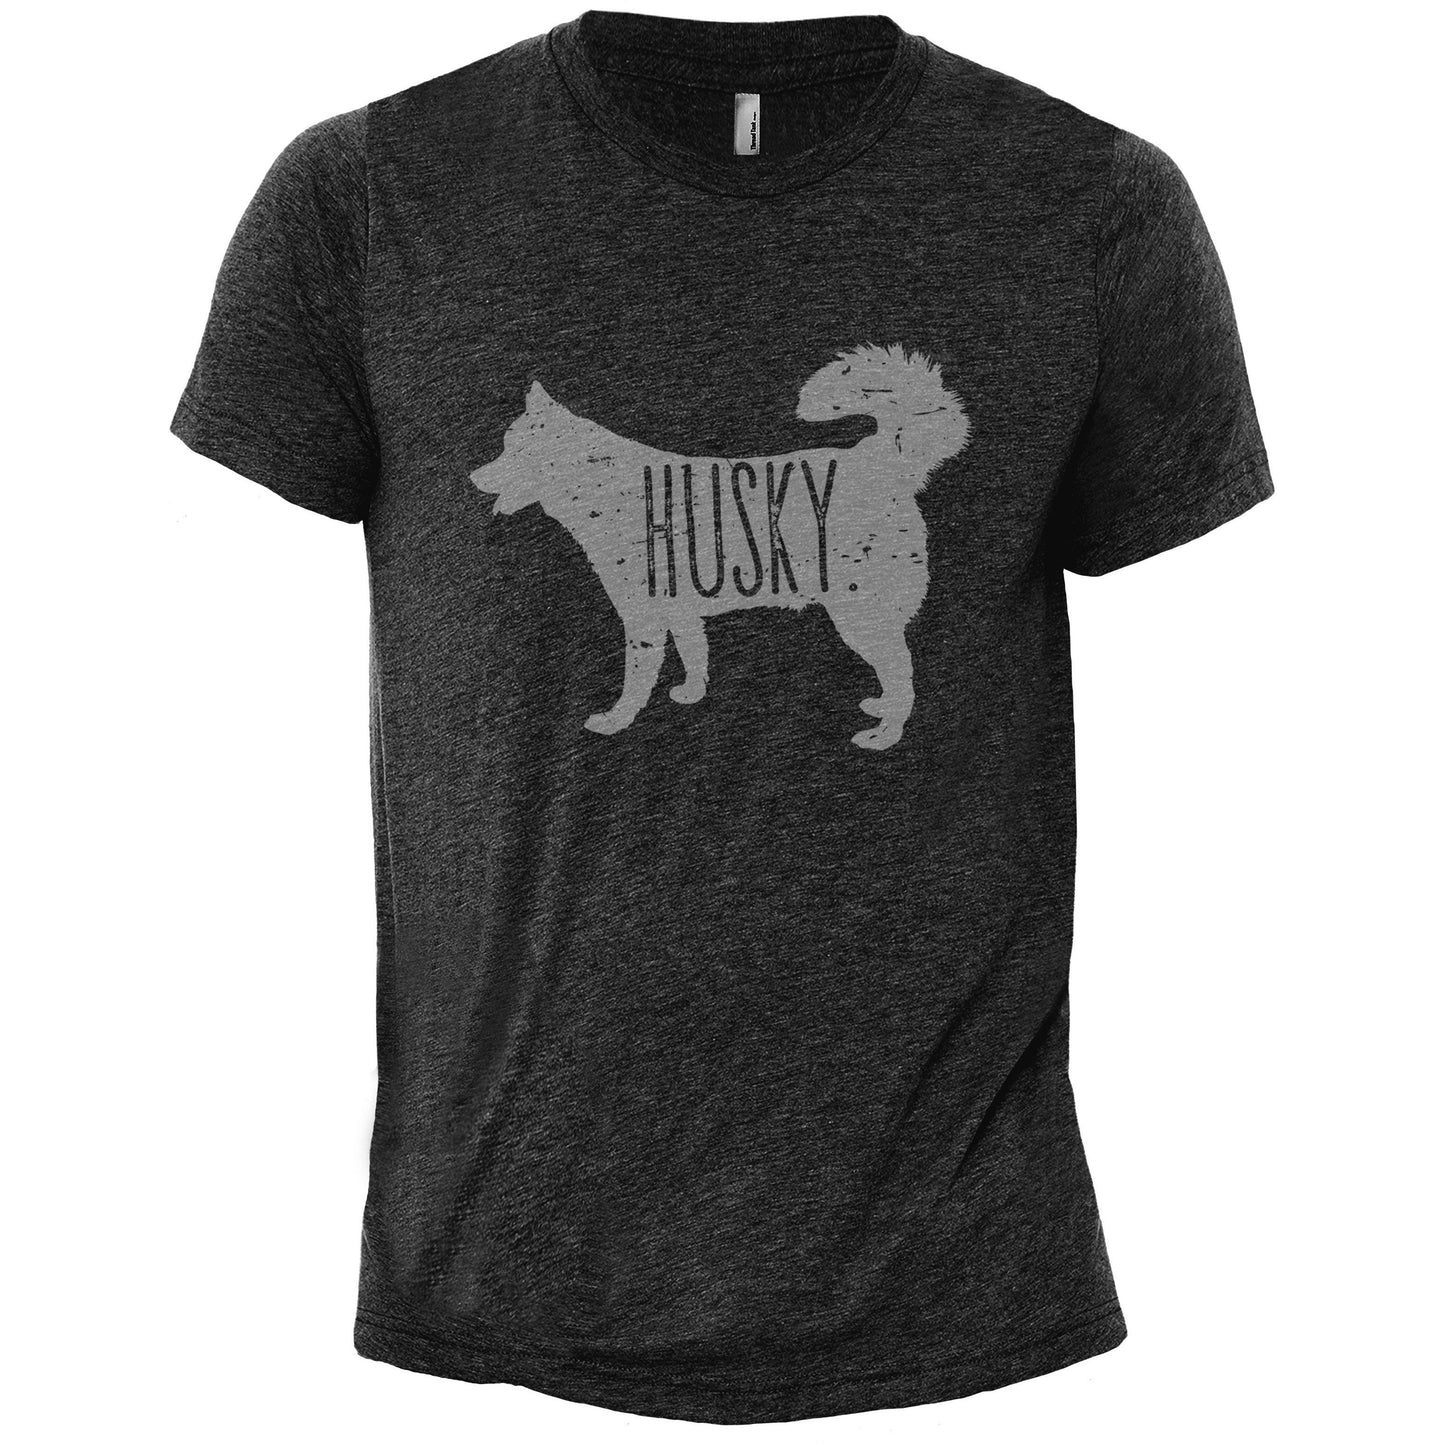 Husky Dog Silhouette Charcoal Printed Graphic Men's Crew T-Shirt Tee